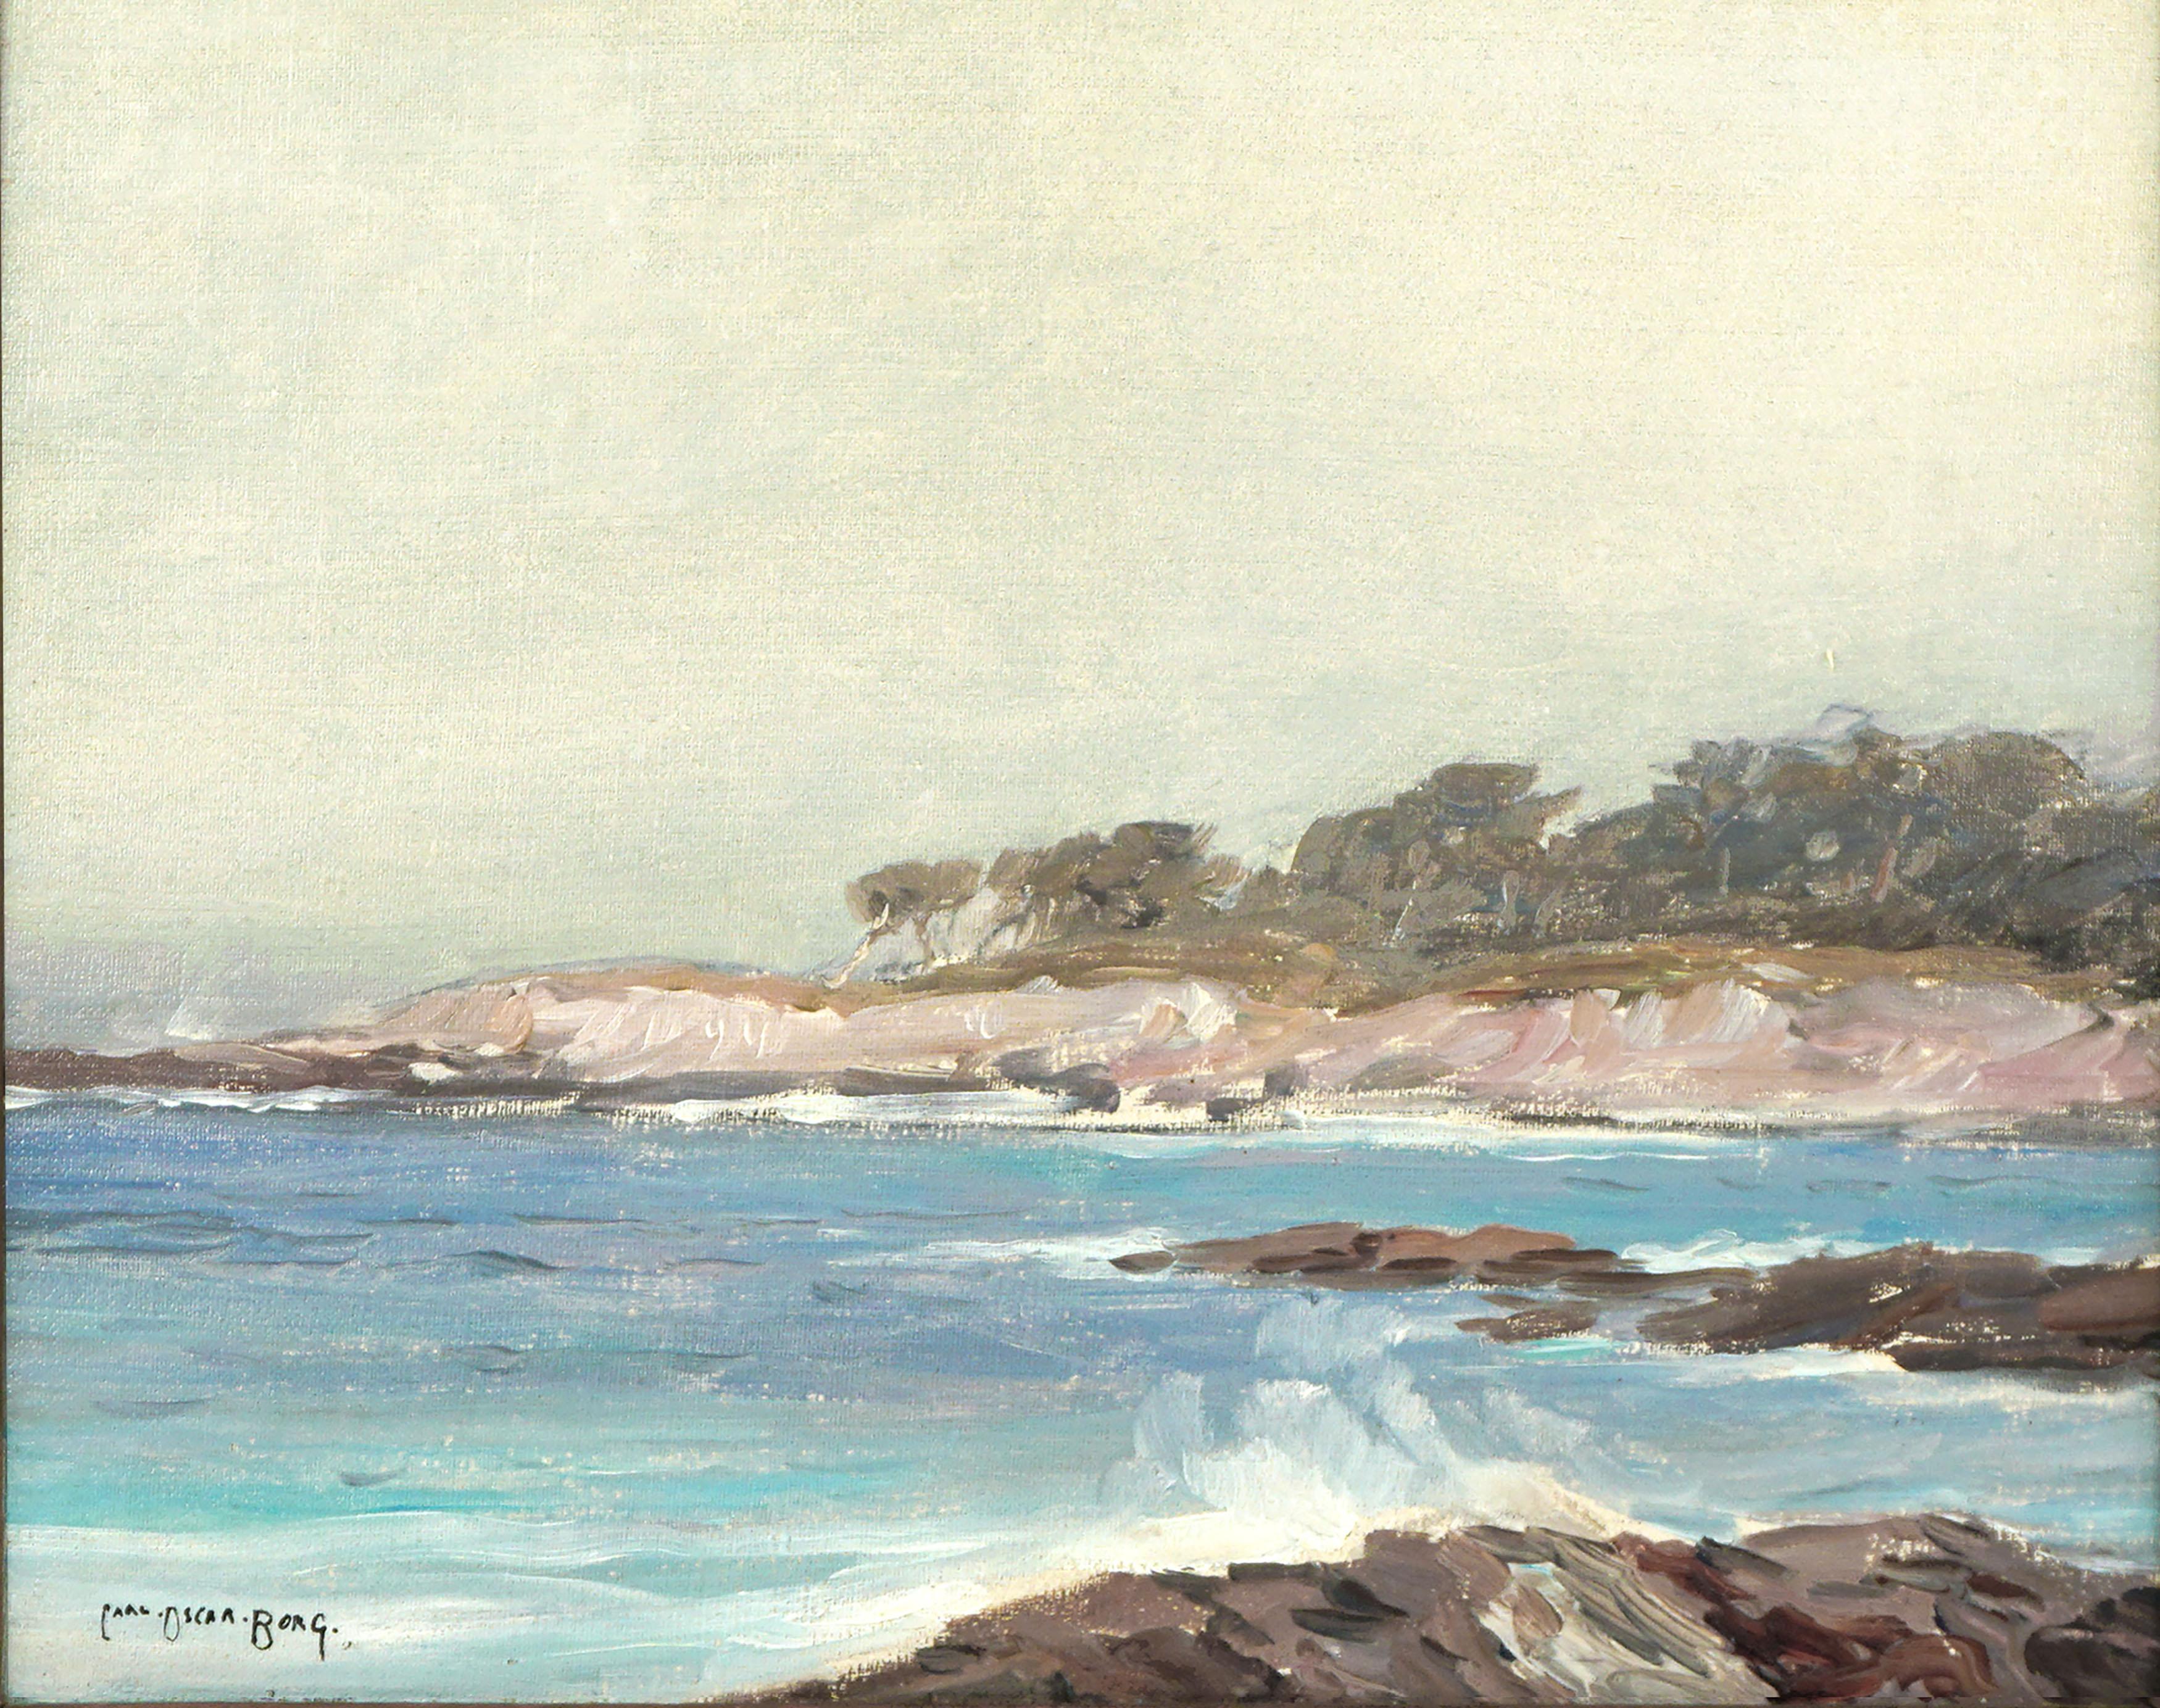 Paysage marin en plein air de Carmel Beach des années 1920 - Painting de Carl Oscar Borg